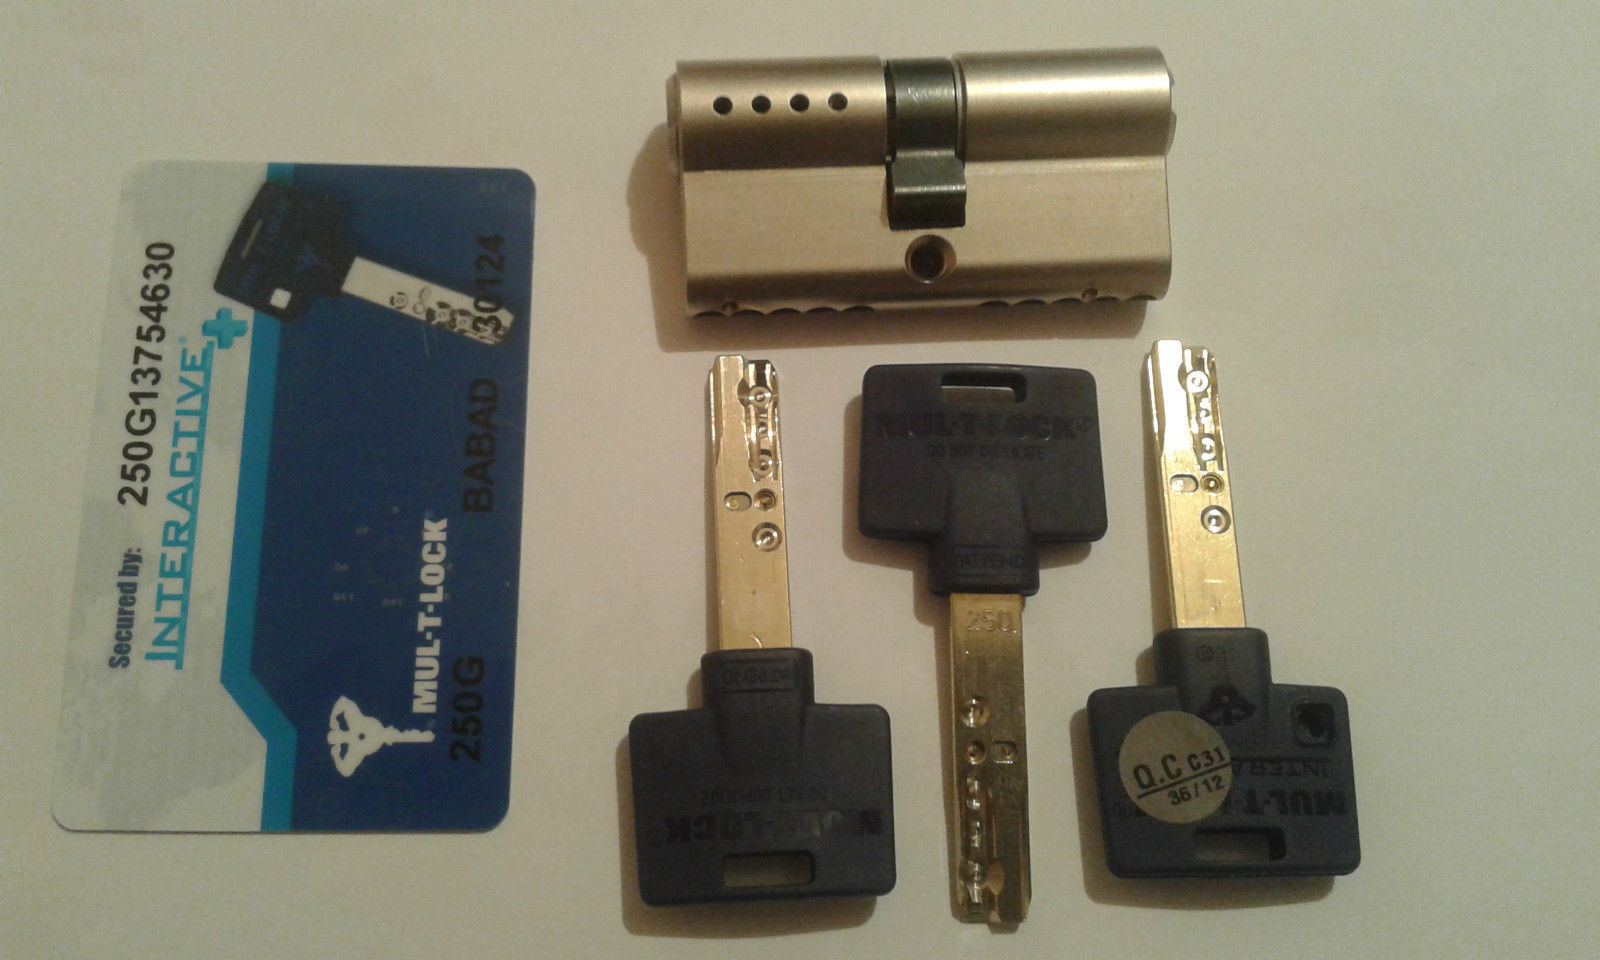 MUL-T-LOCK INTERACTIVE + High Security Euro Cylinder Door Lock With 3 Keys - $1.00 - $130.00